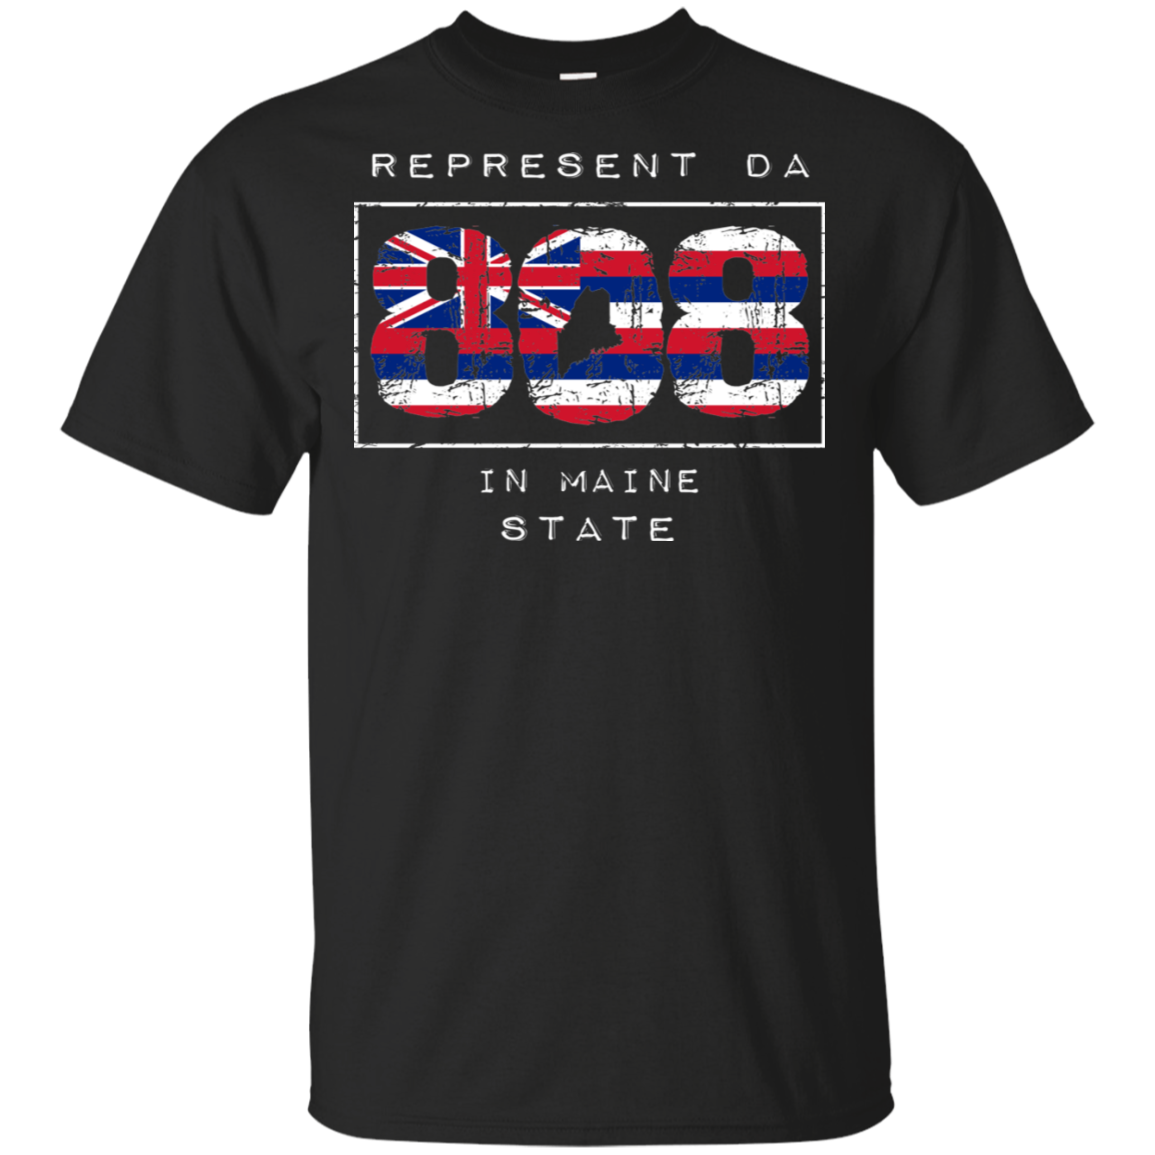 Rep Da 808 In Maine State Ultra Cotton T-Shirt, T-Shirts, Hawaii Nei All Day